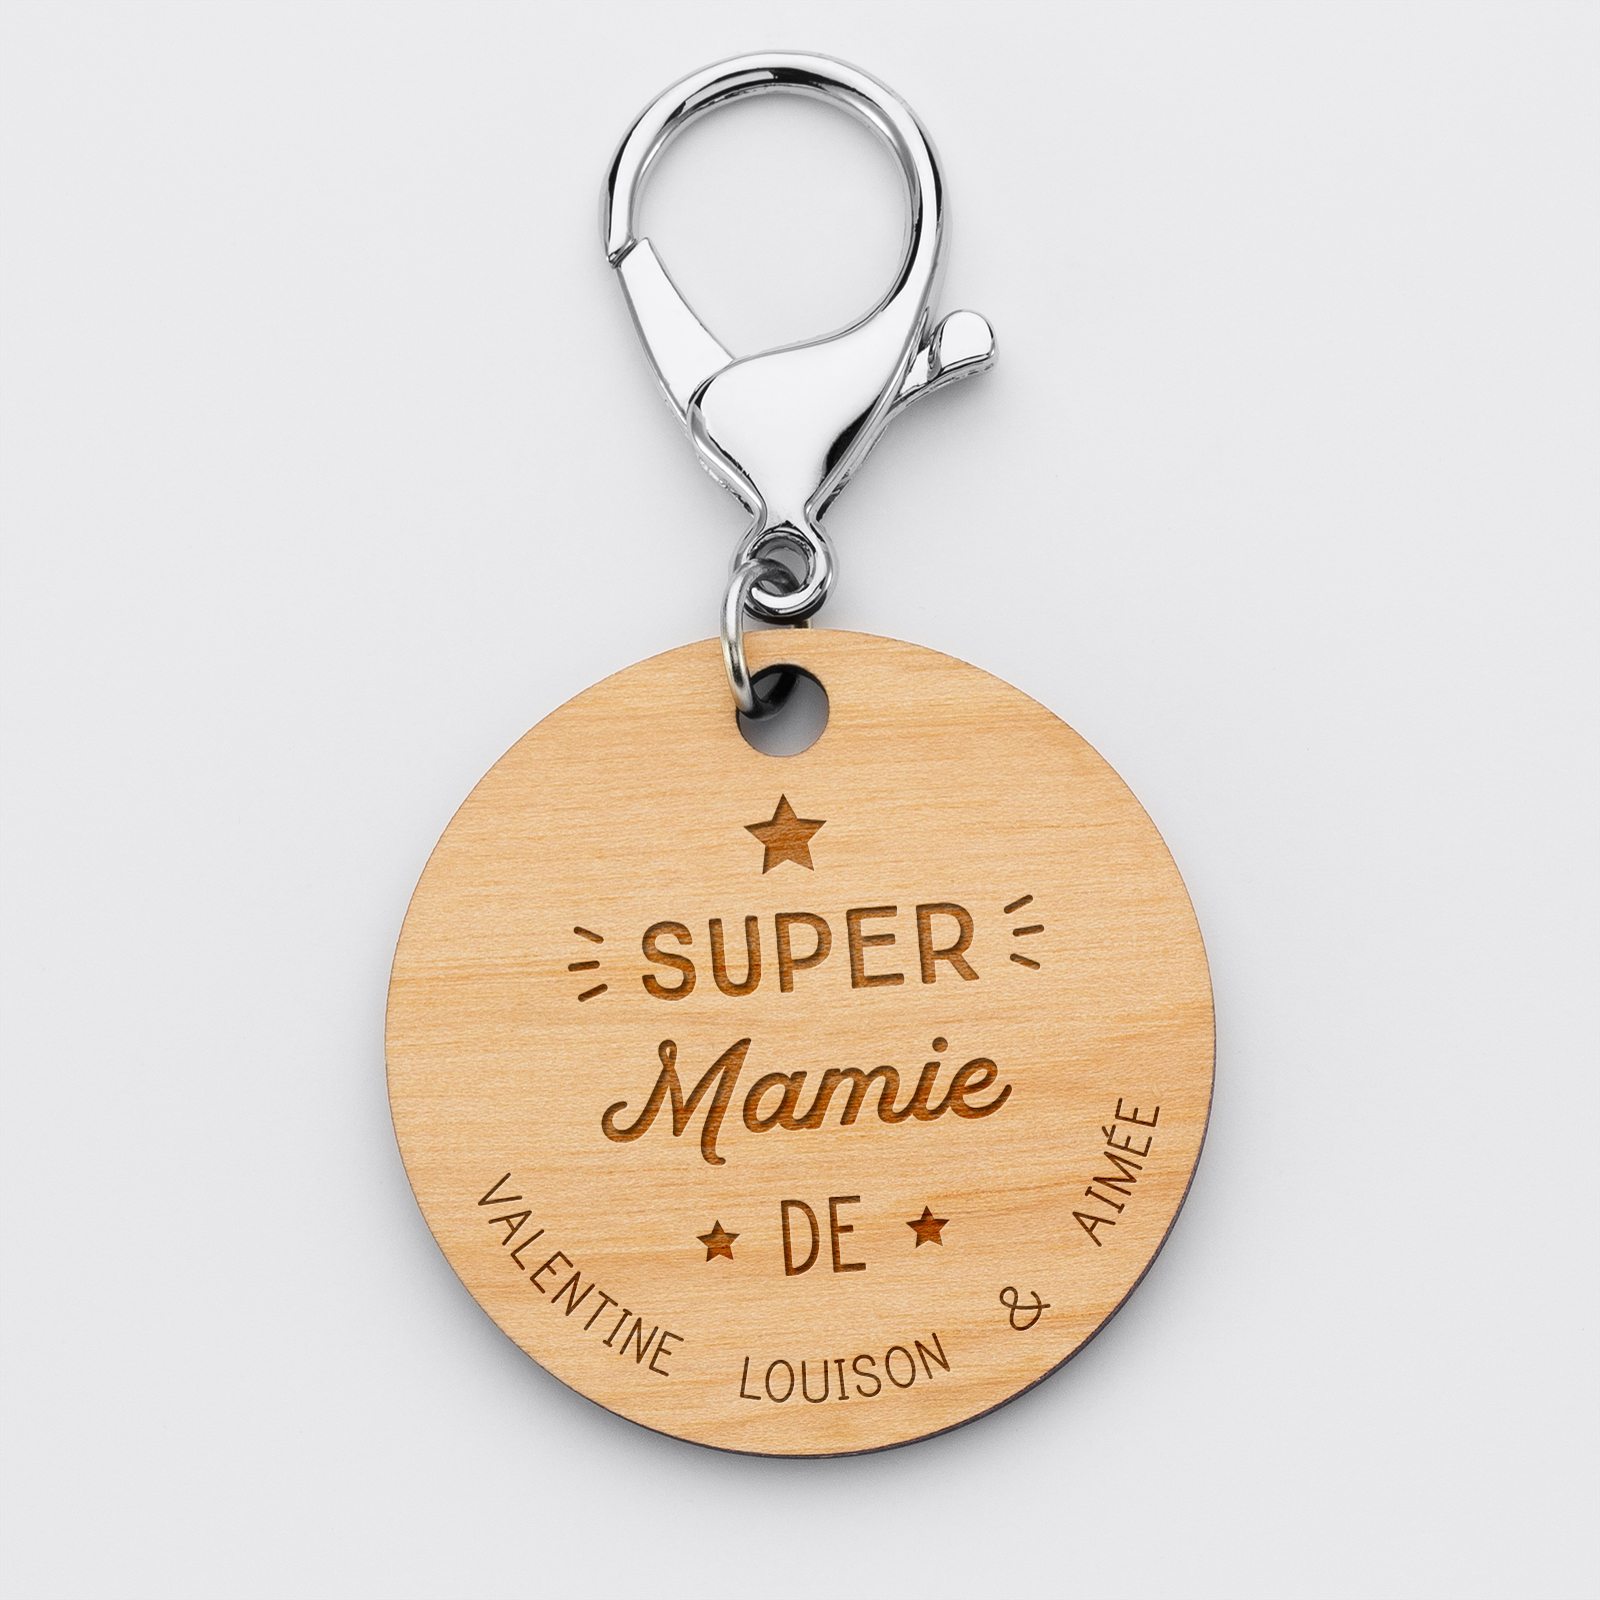 Personalised engraved wooden "Super Grandma" round names medallion keyring 50mm - 1